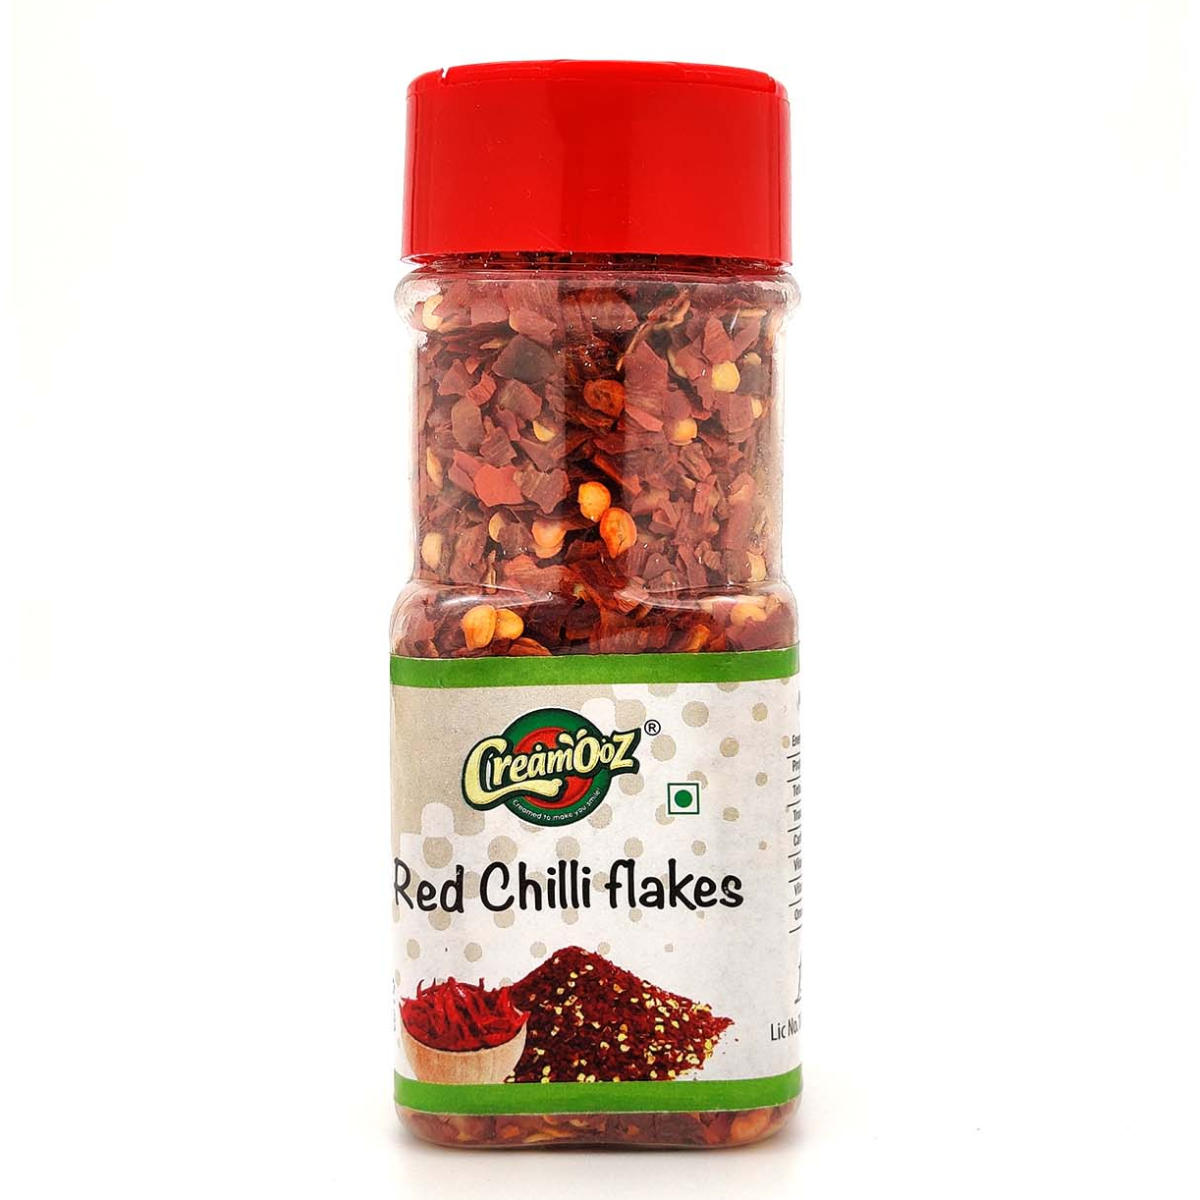 Creamooz red chilli flakes